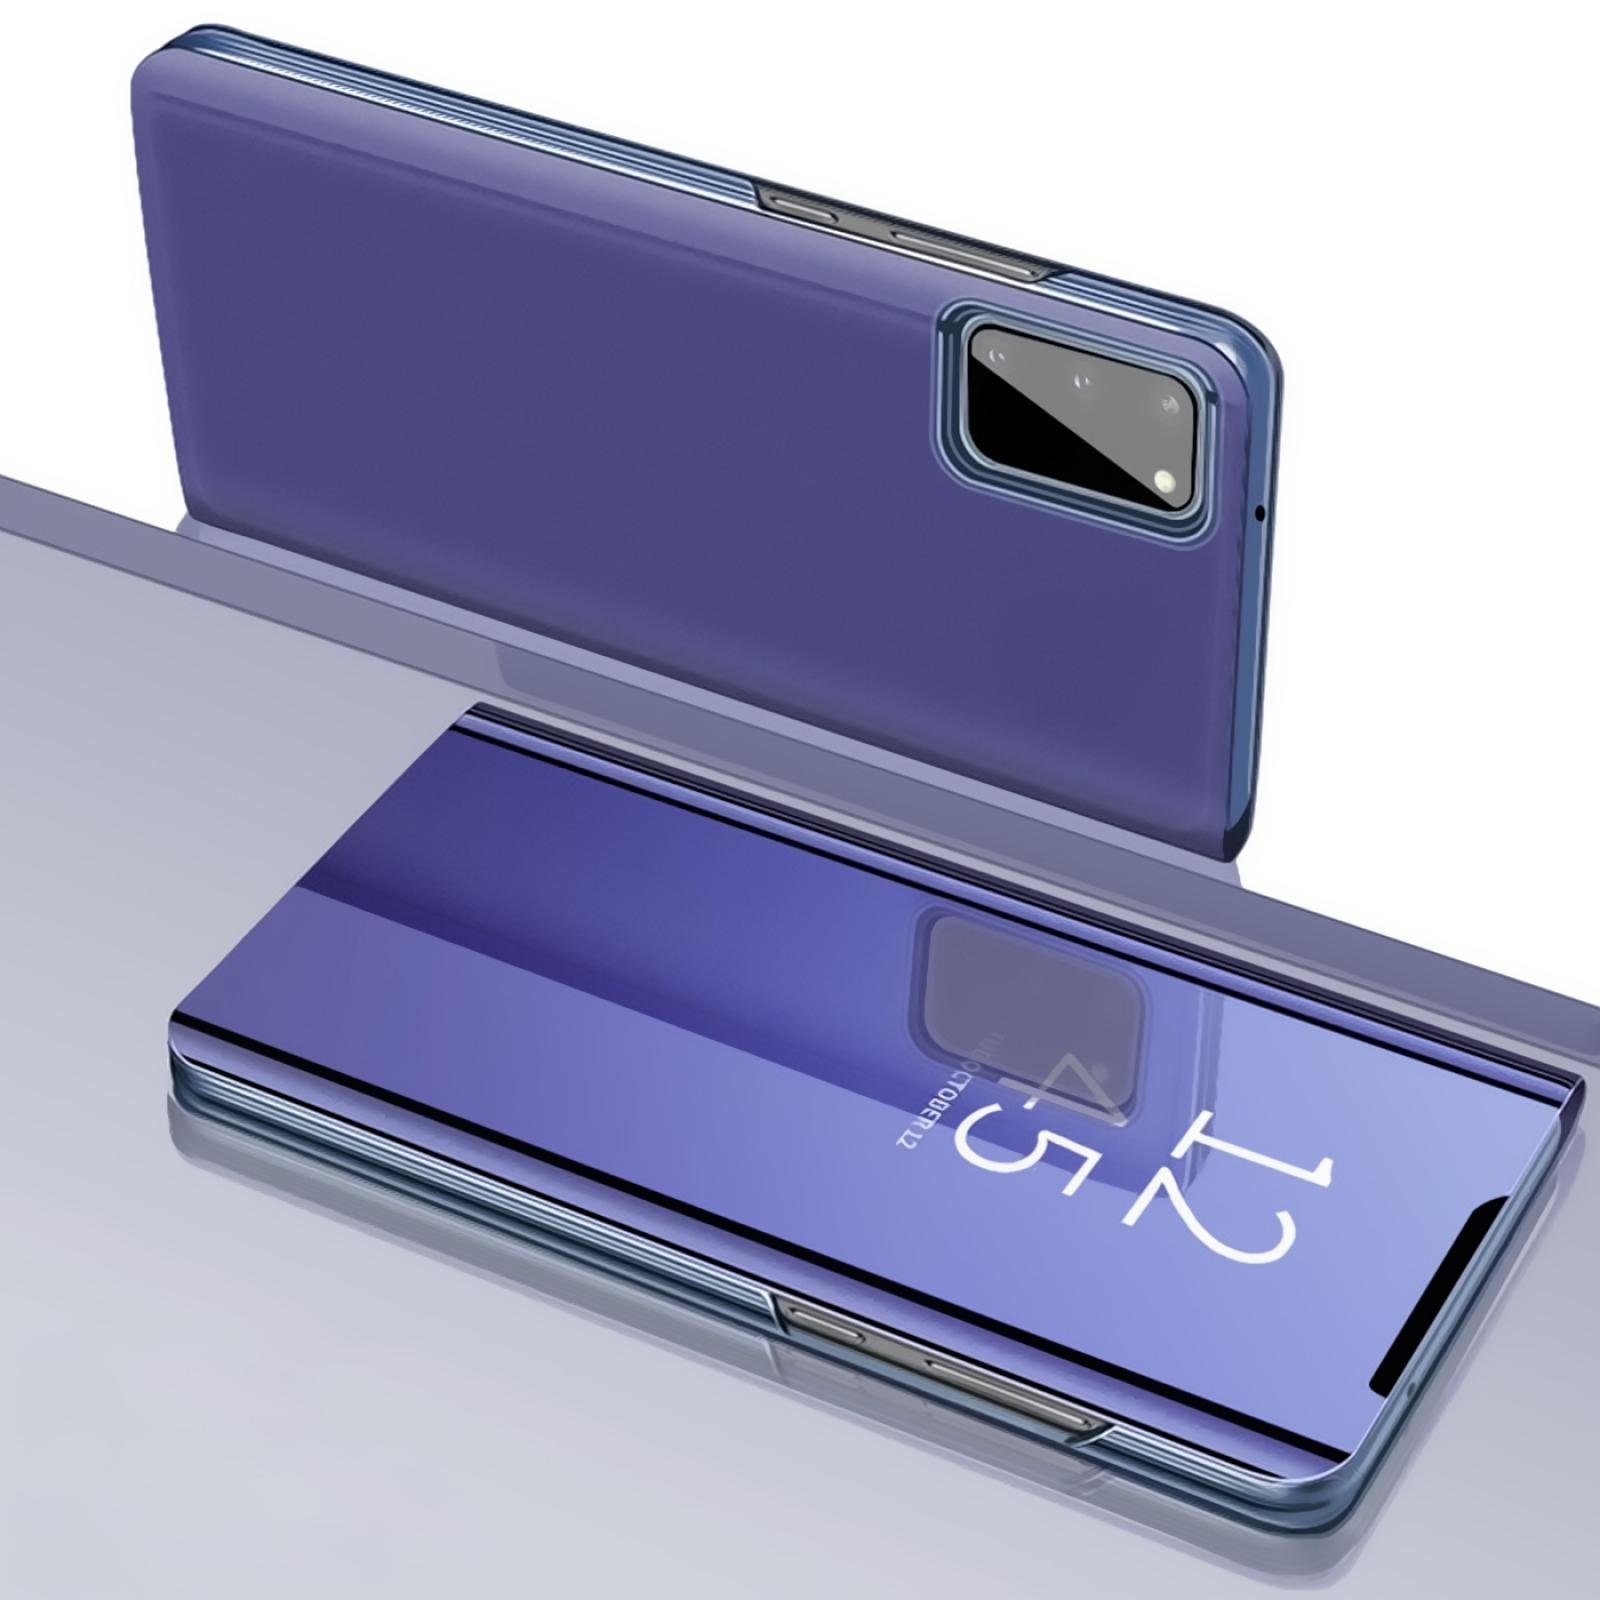 Numerva View Cover View Cover für Samsung Galaxy S20 FE, Schutz Hülle Flip Cover Smart View Case